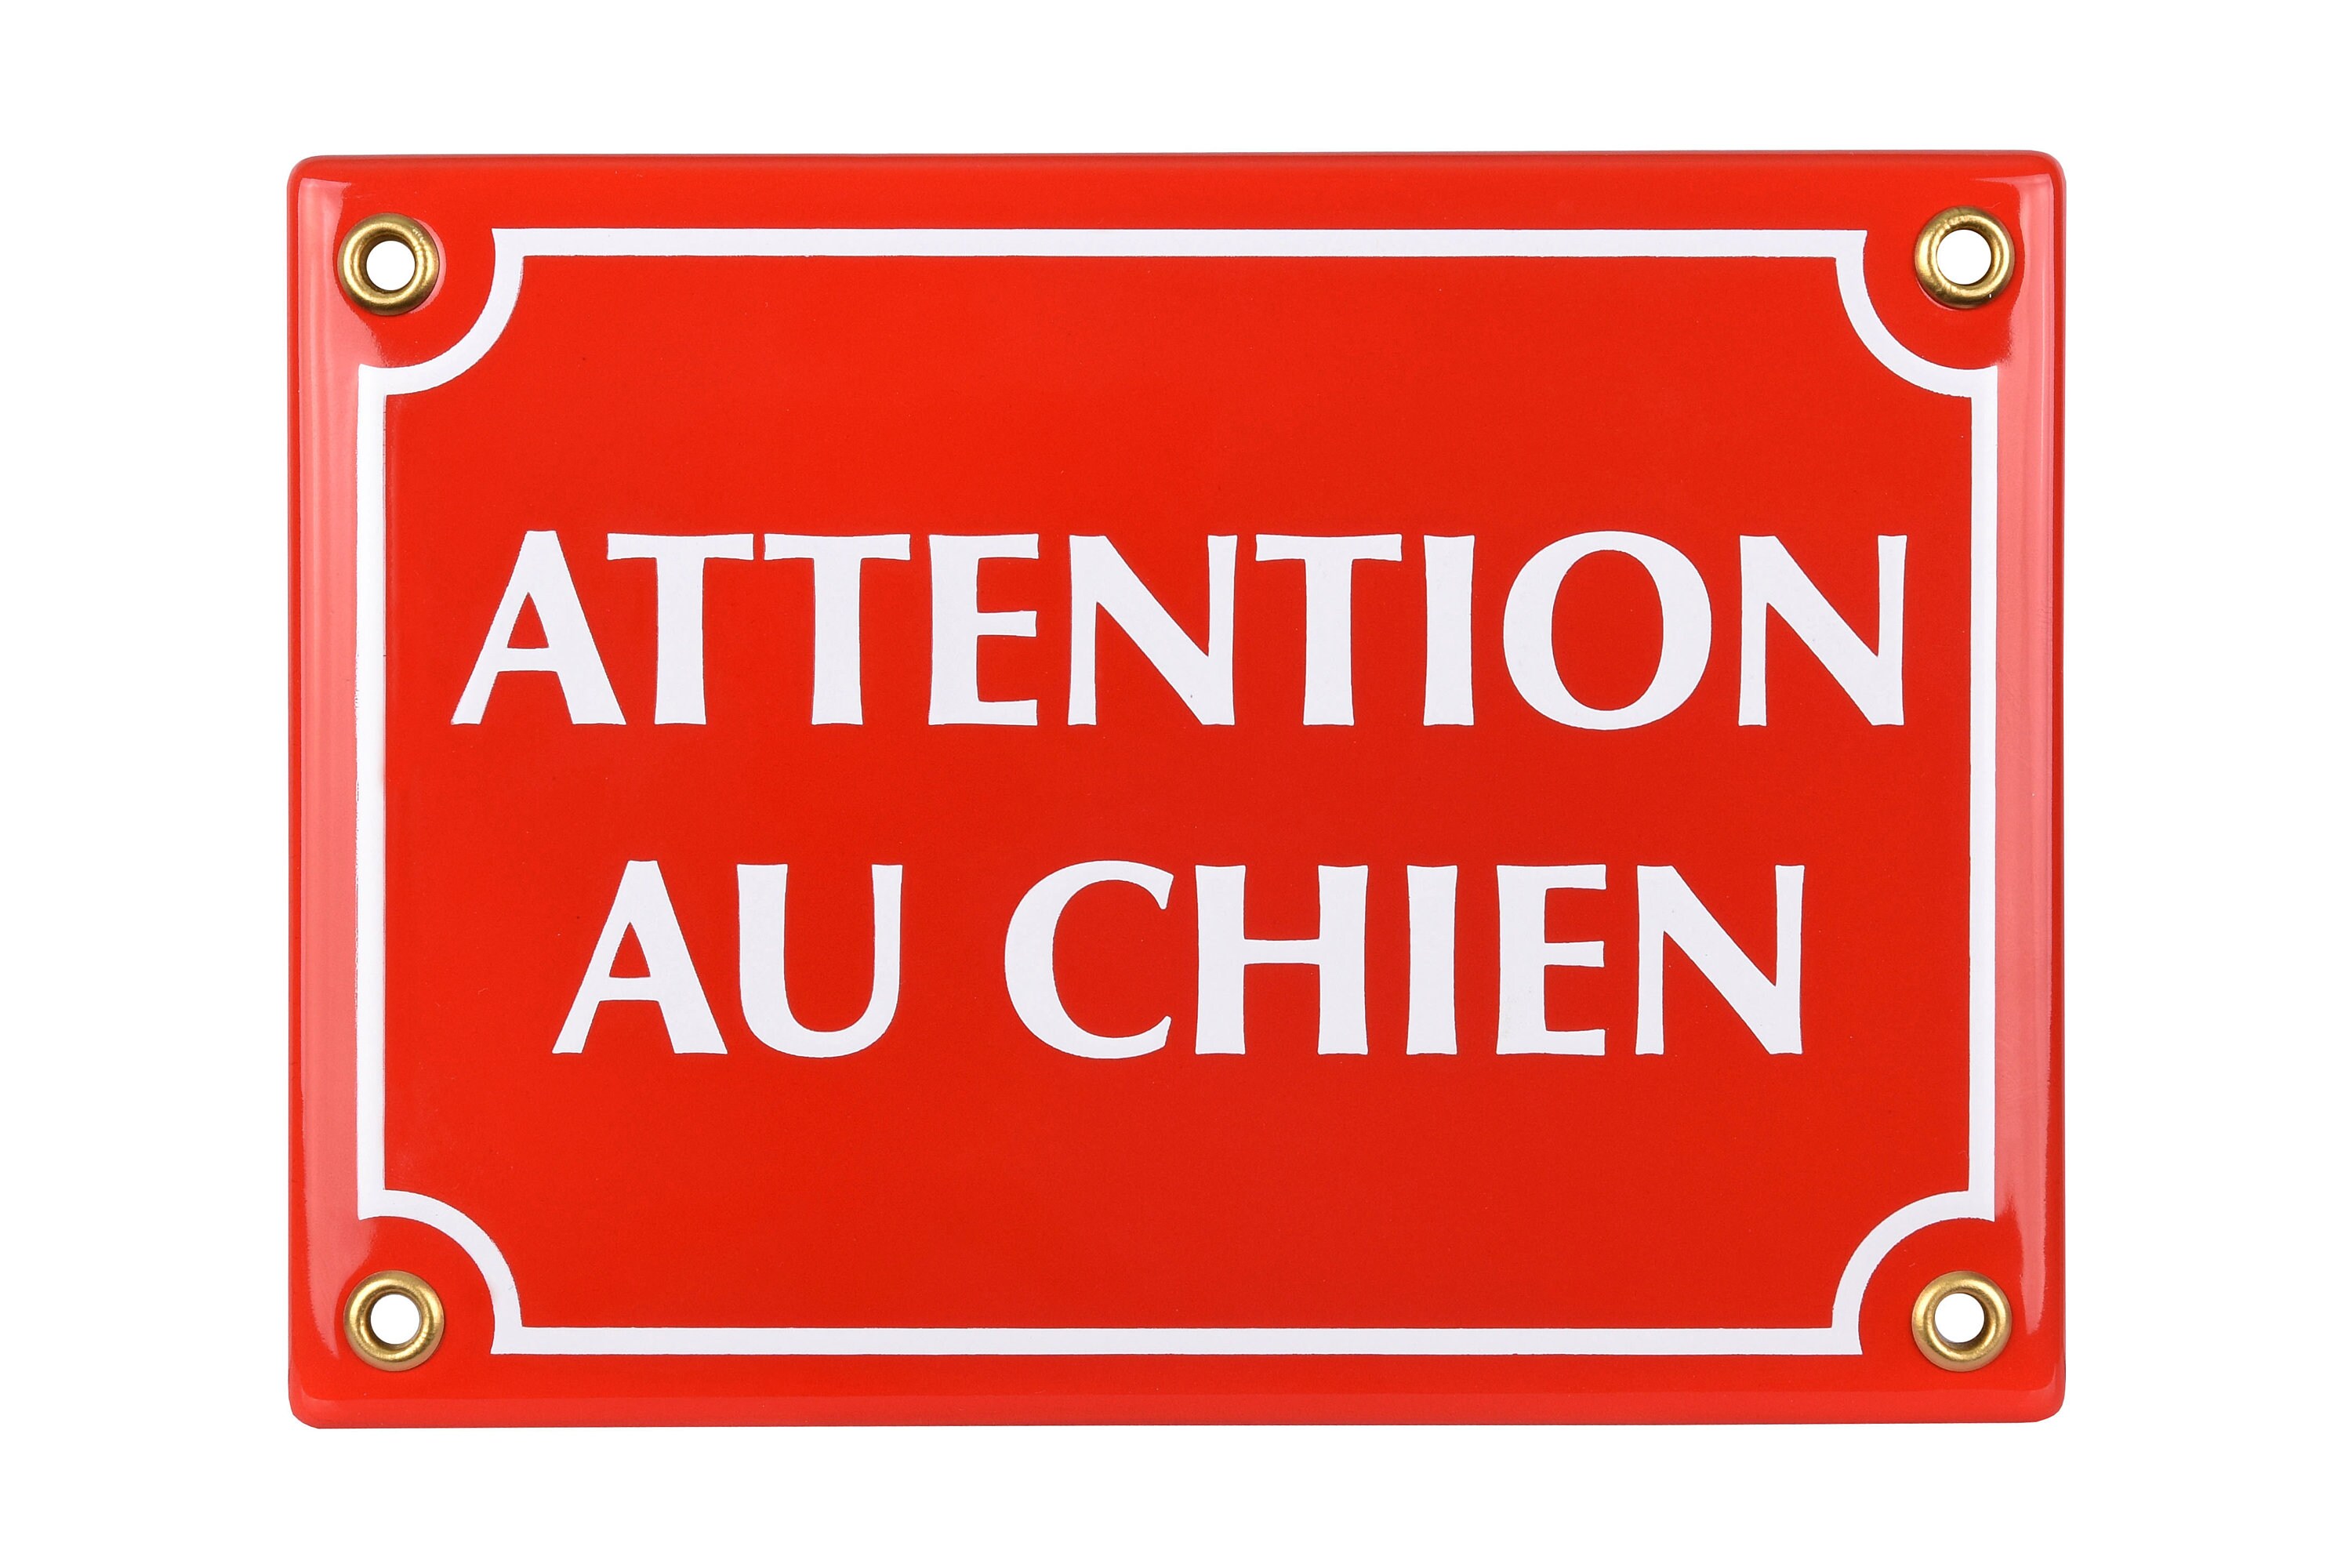 ATTENTION AU CHIEN French Enamel Sign 12x17 Cm 4.7 X 6.7, Deep Blue, Red,  White, Propriete Privee Vintage Plaque, Handmade 